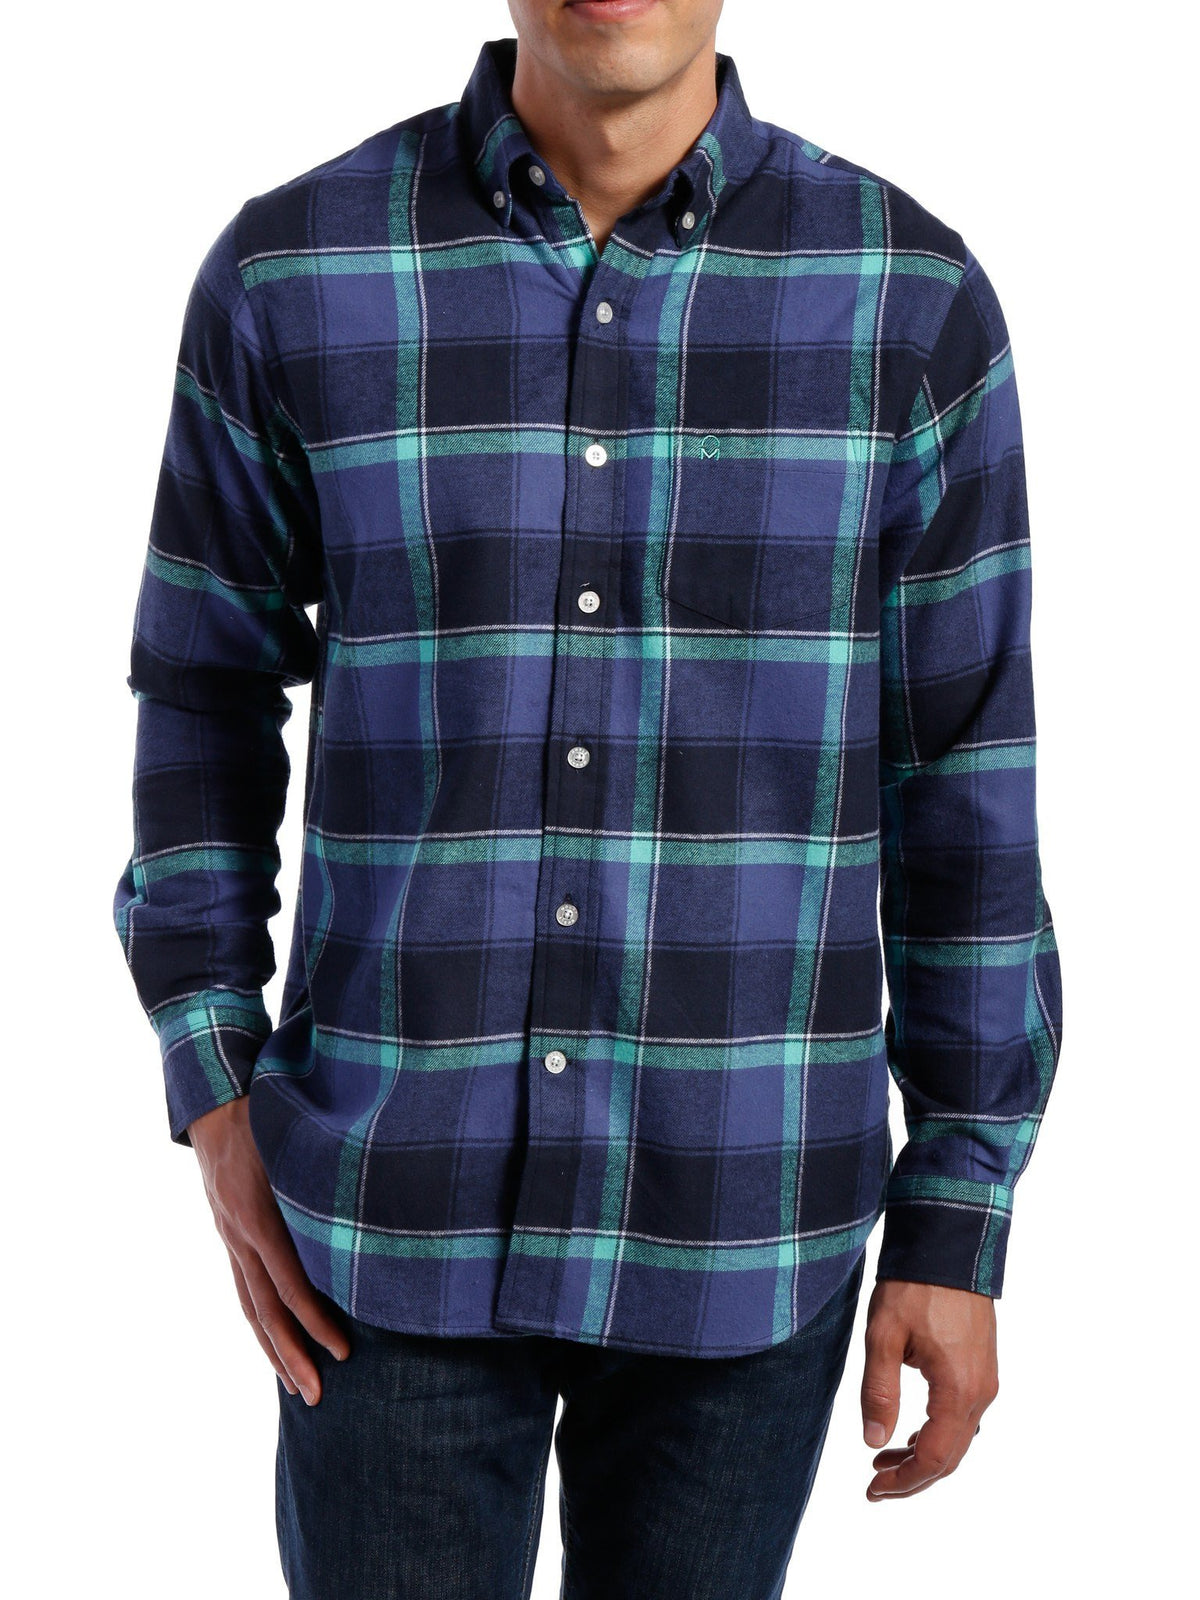 Mens 100% Cotton Flannel Shirt - Regular Fit - Indigo-Green Plaid